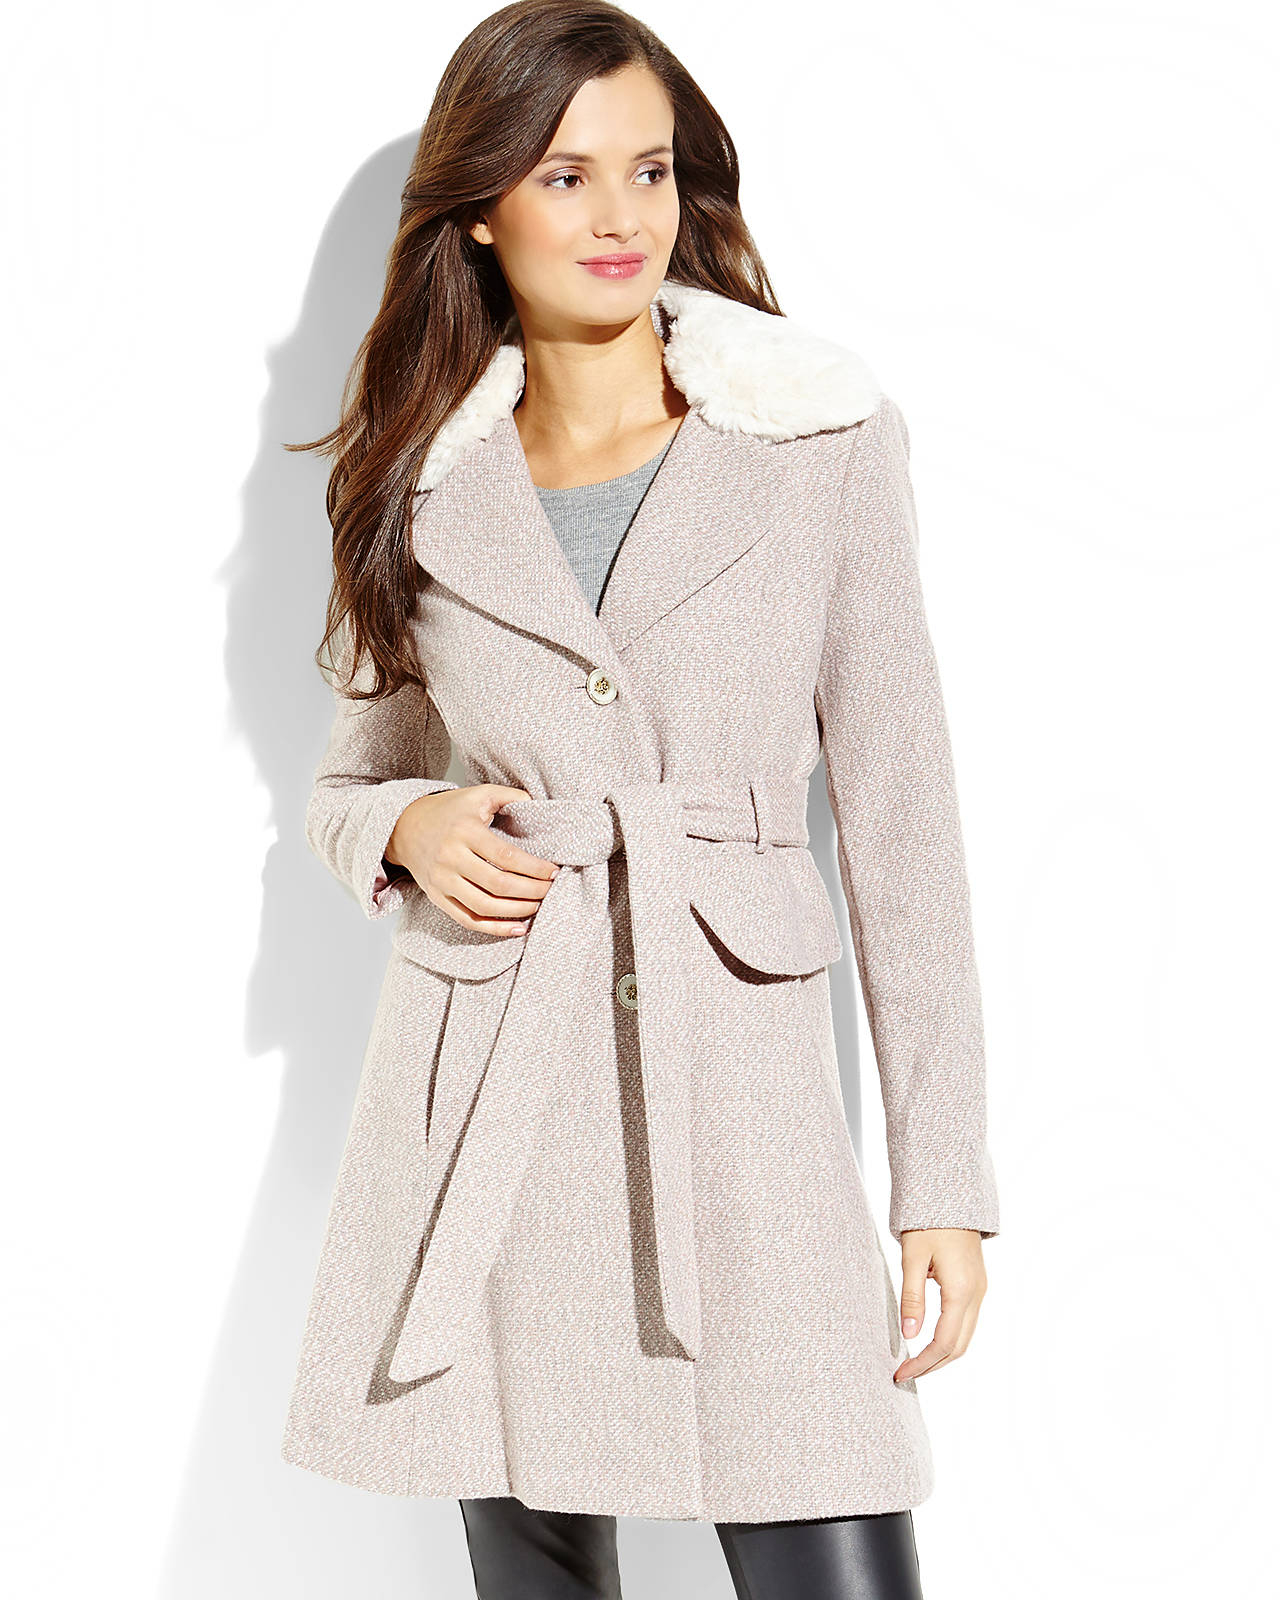 Jessica simpson Blush Faux Fur Trim Tweed Coat in Gray | Lyst1280 x 1600